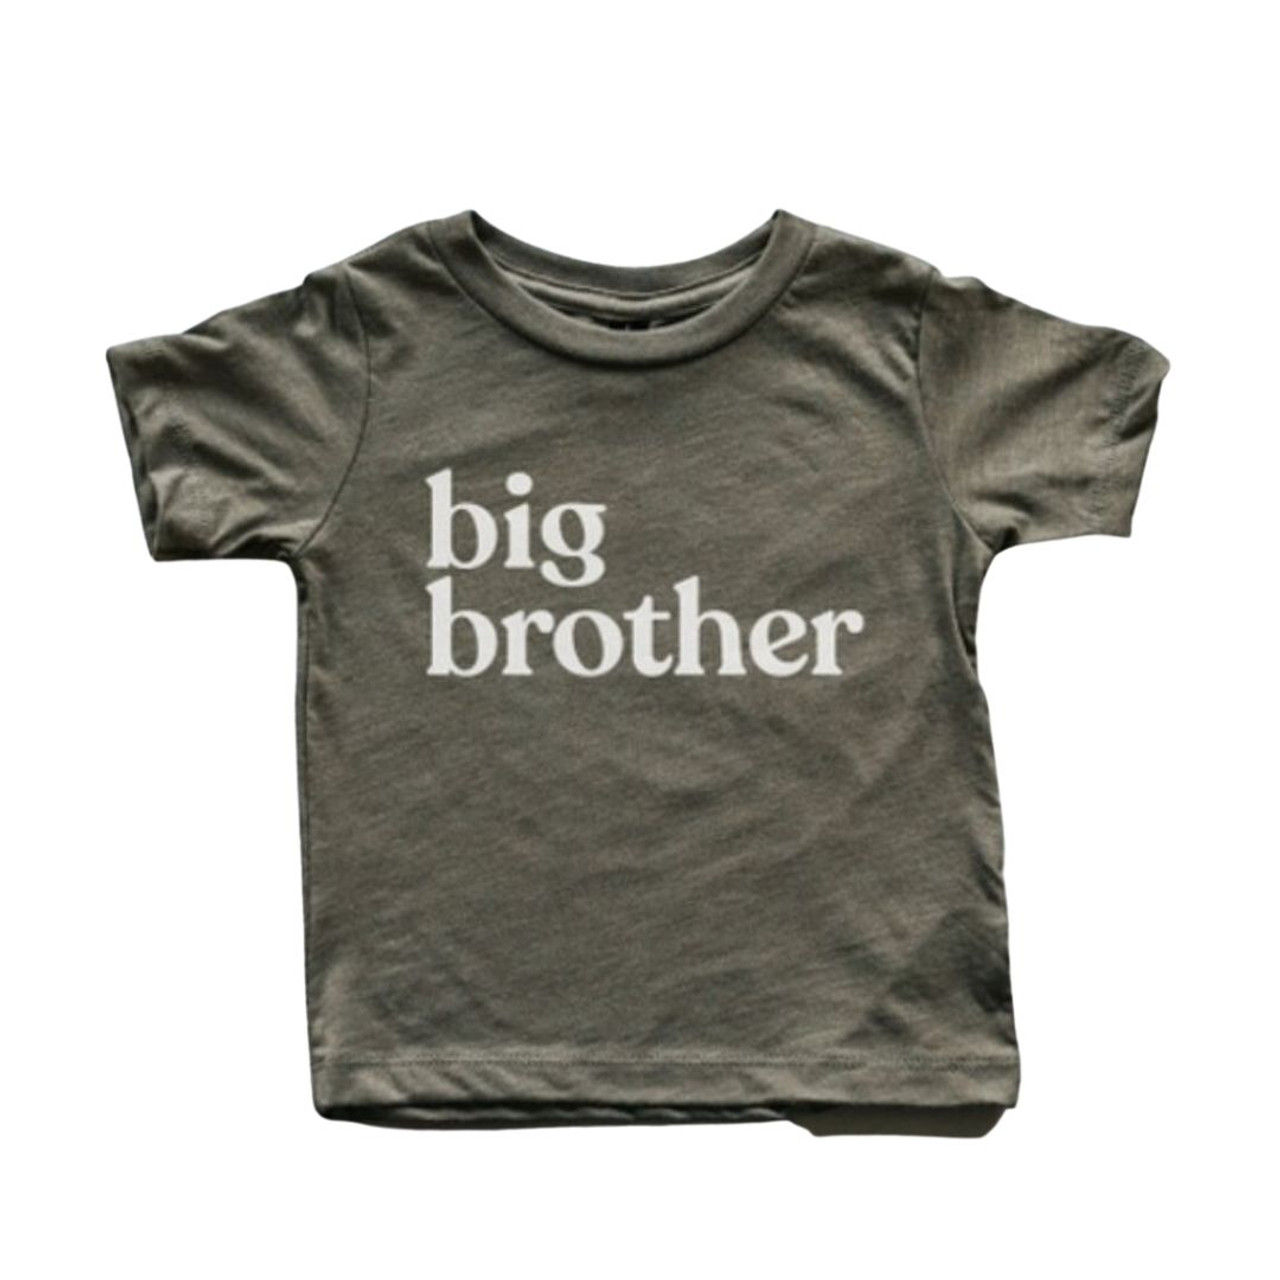 Big Brother T-Shirt - Olive, 4T